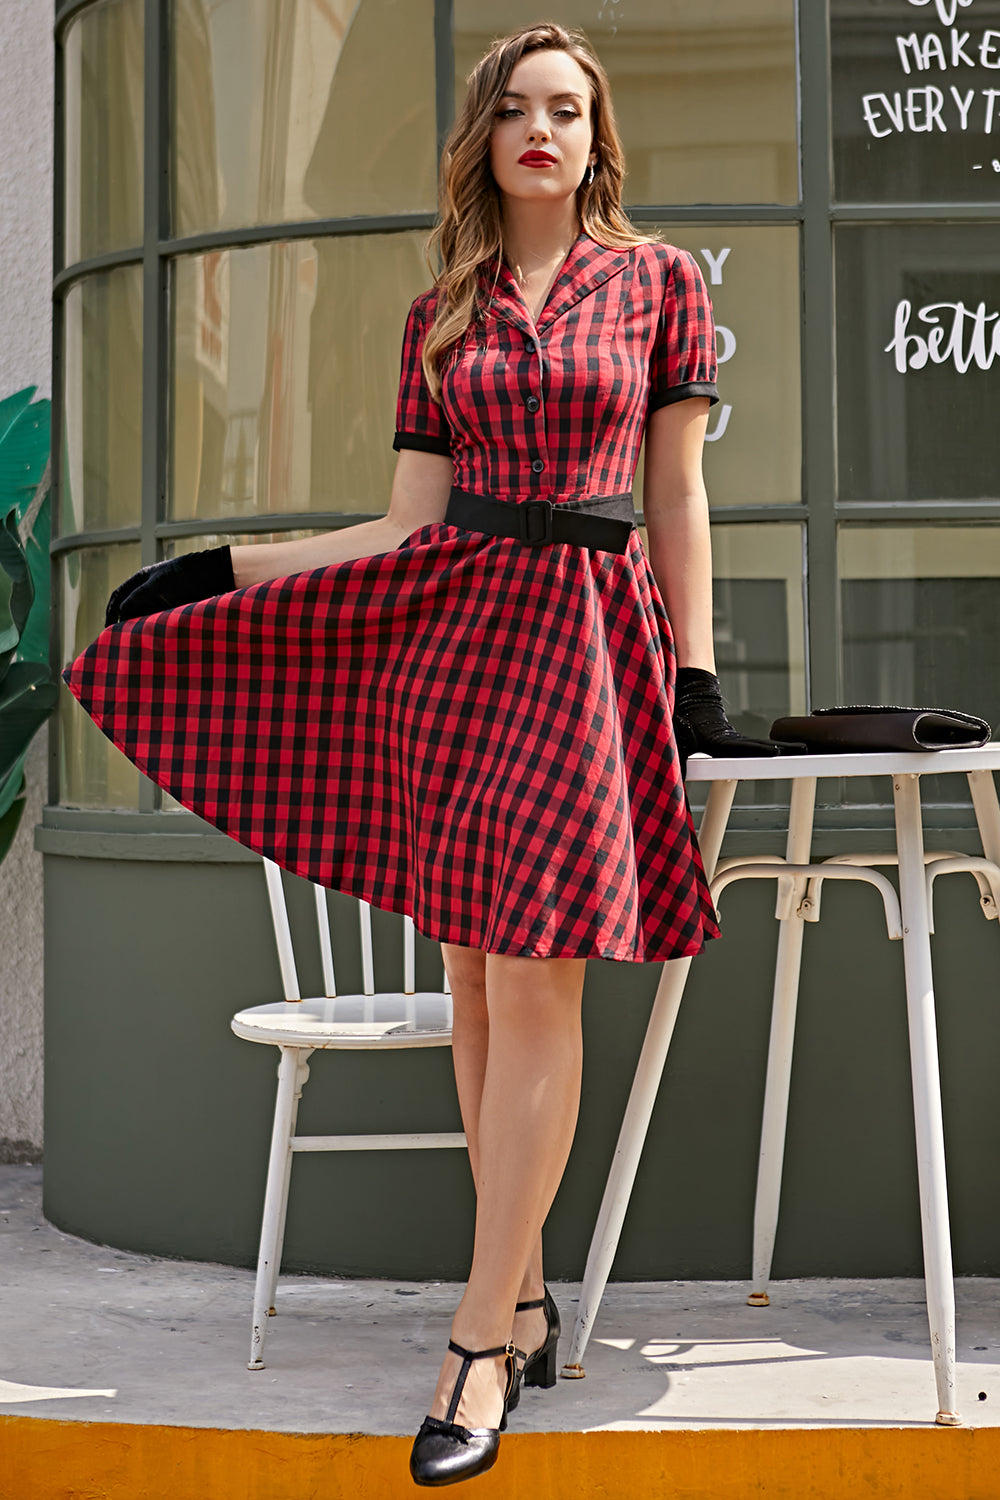 Zapaka Women Vintage Plaid 1950s Dress Short Sleeves Collared